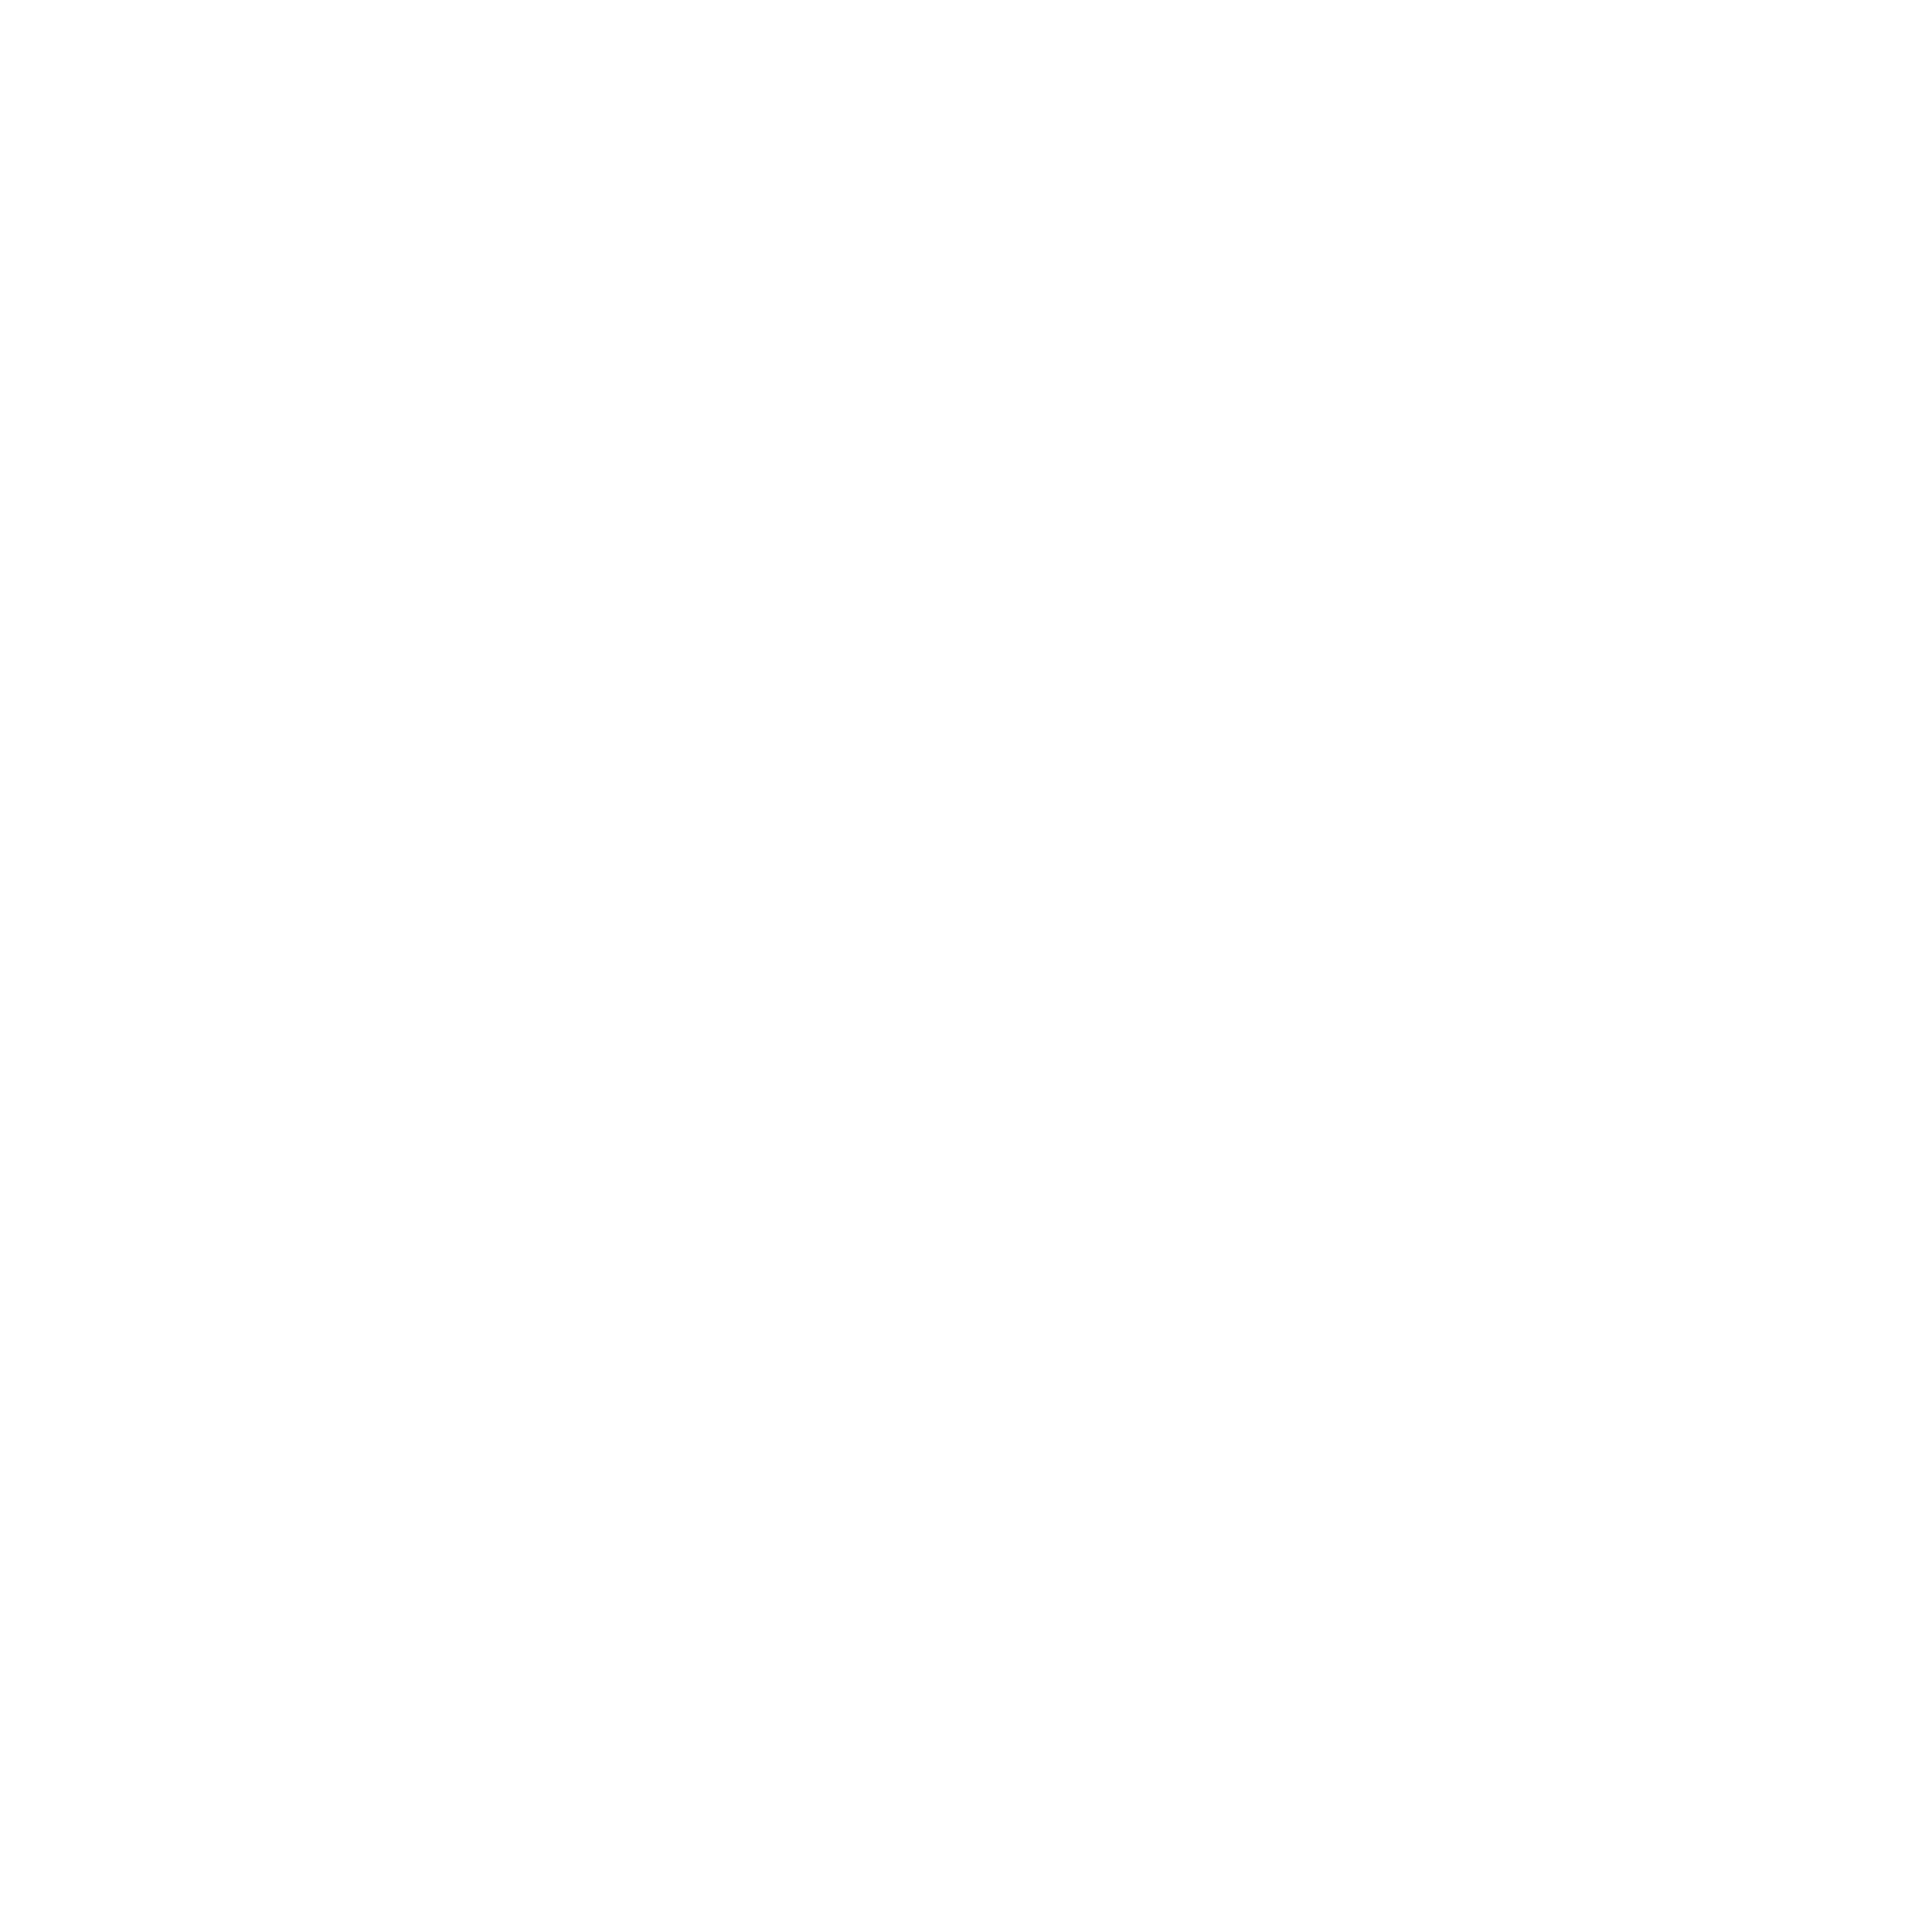 Banana Republic Logo - Banana Republic Logo PNG Transparent & SVG Vector - Freebie Supply